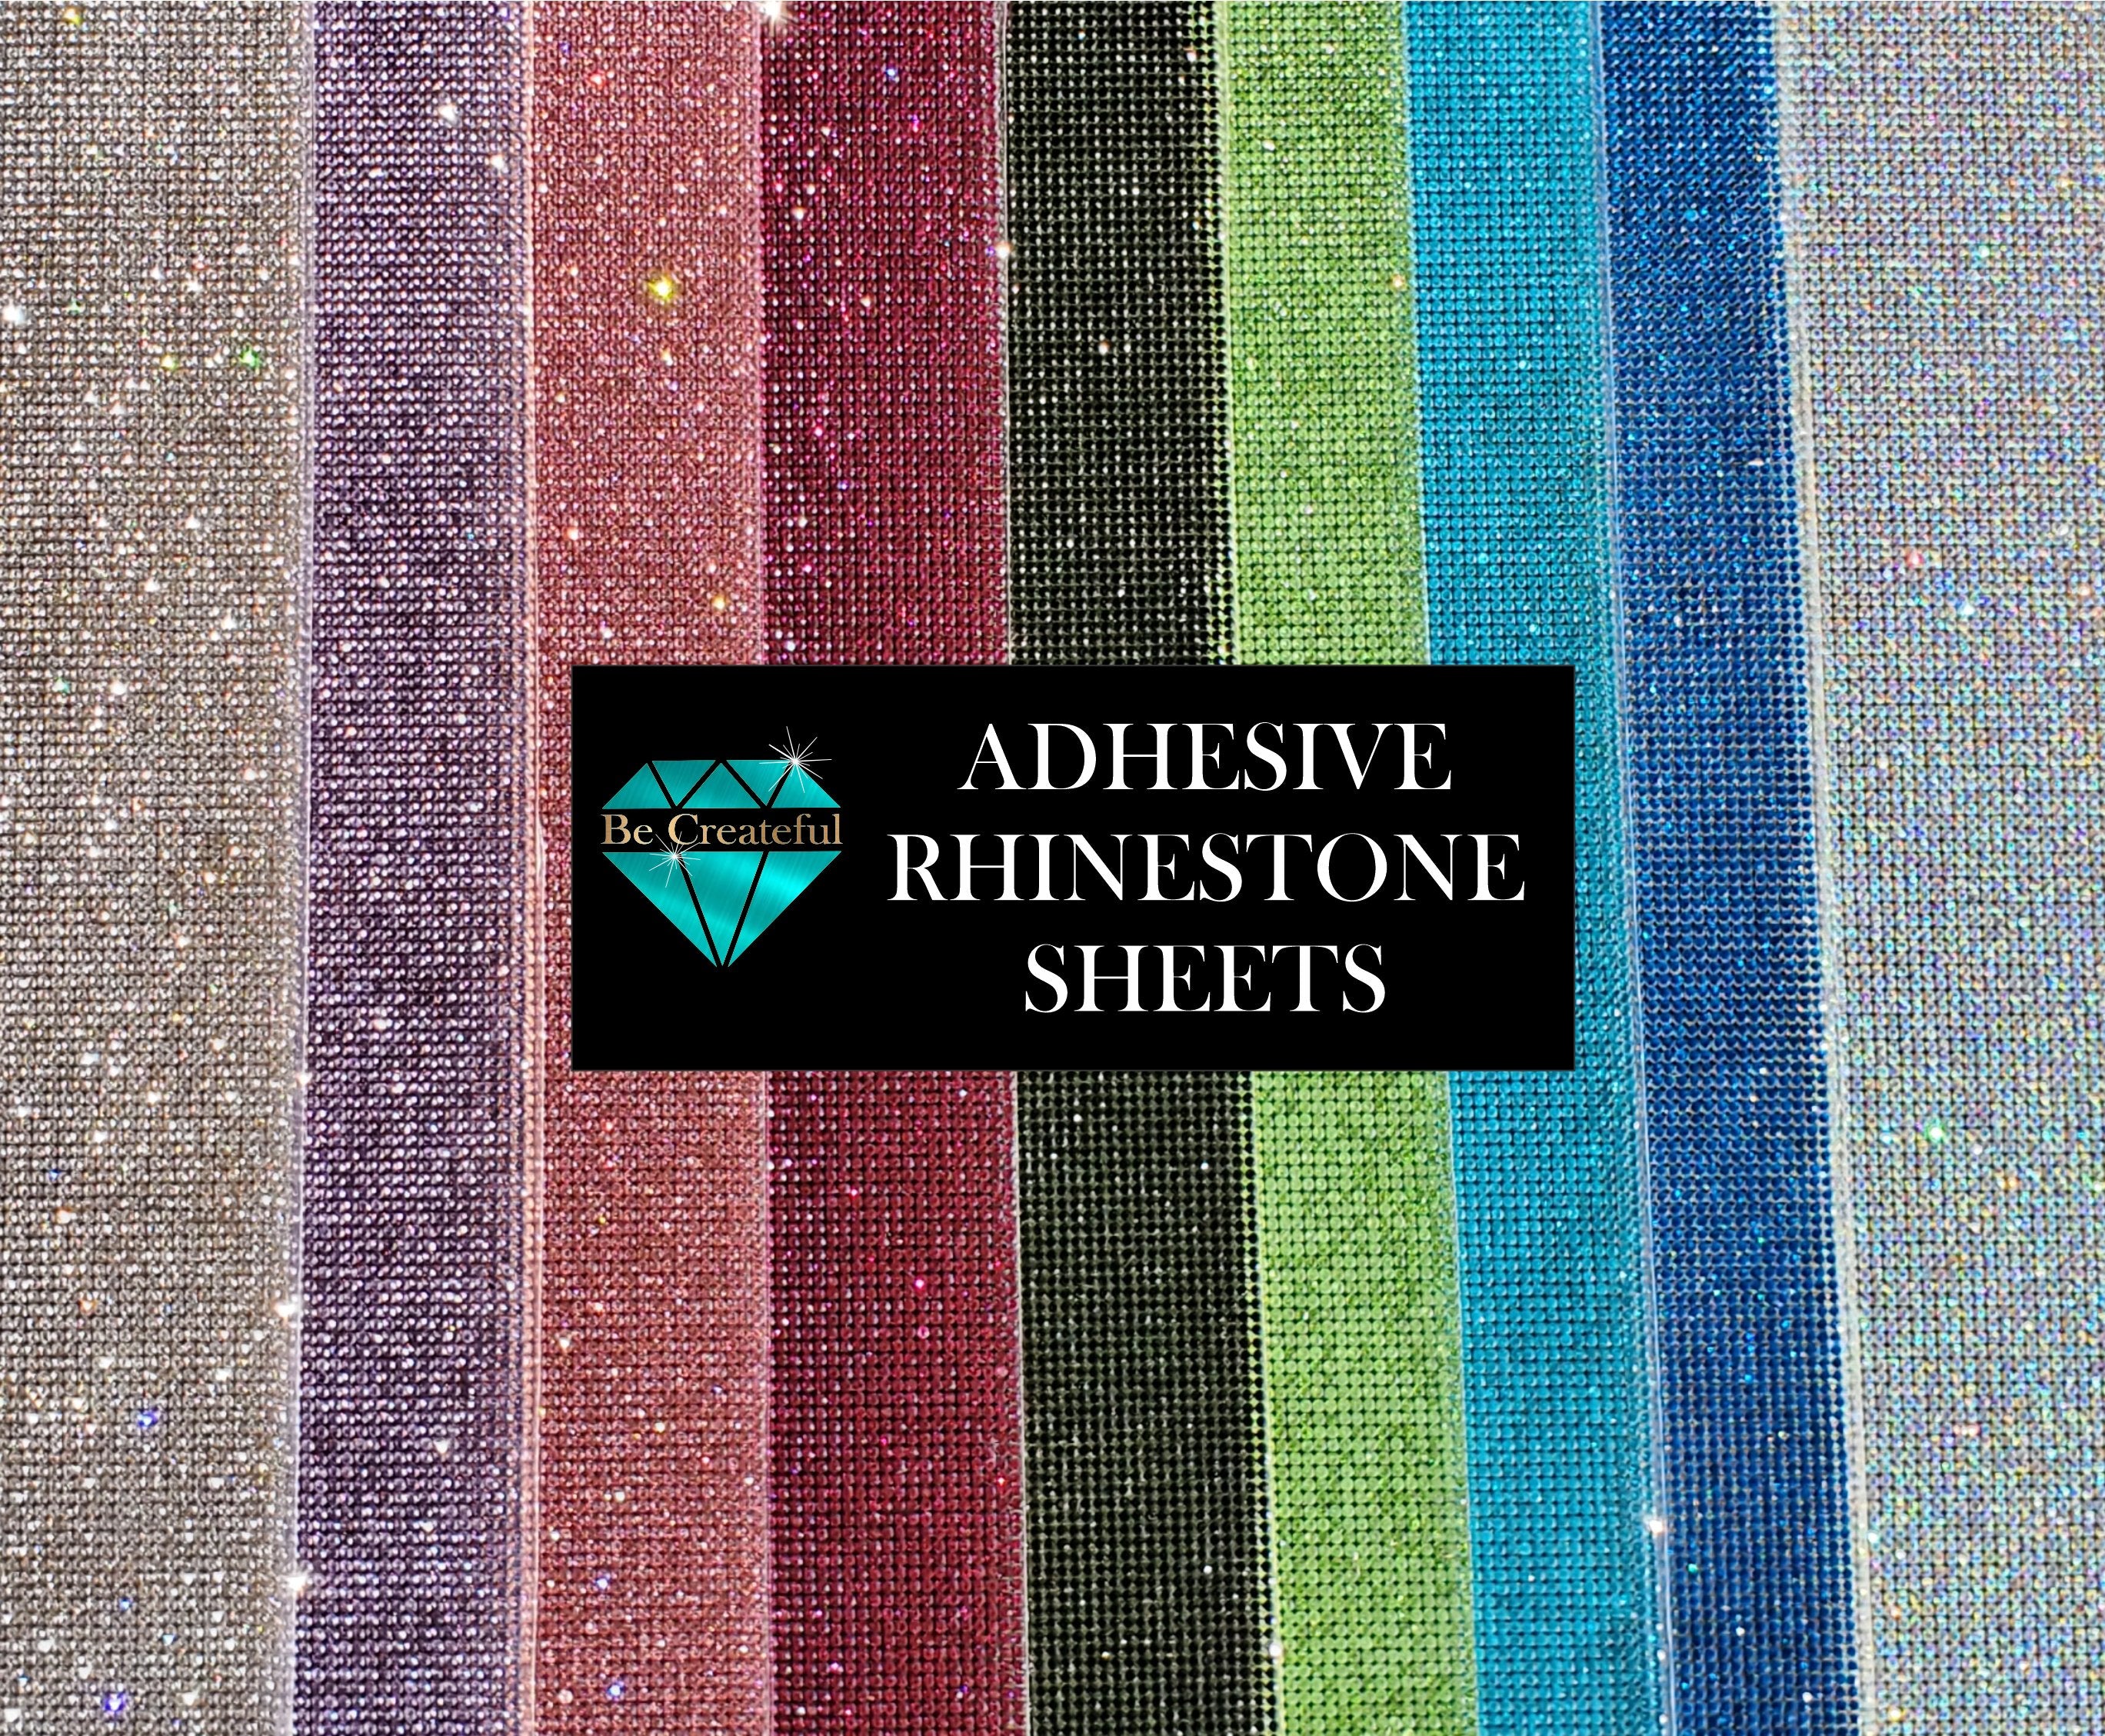 Rhinestone Sheet W Adhesive Backedblack Rhinestonerhinestone